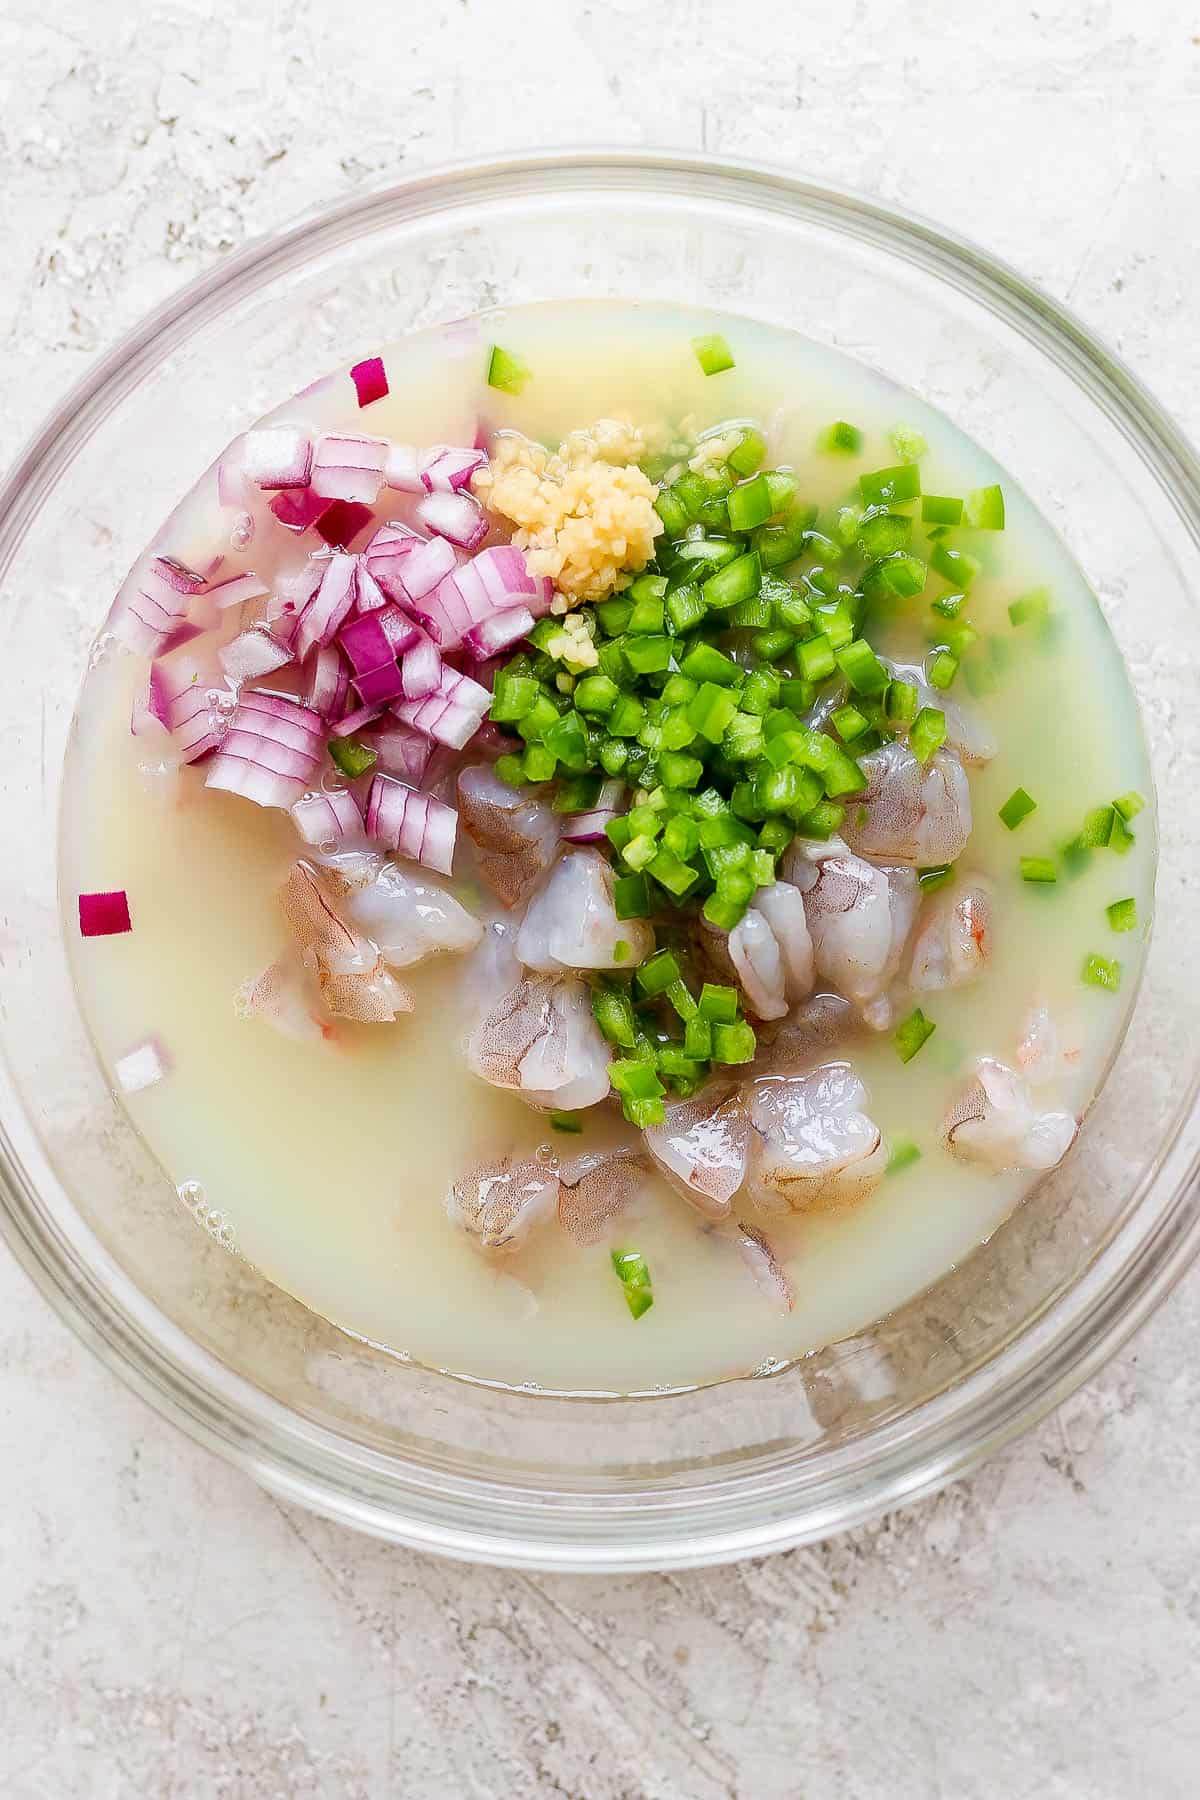 Lemon juice, lime juice, red onion, garlic, jalapeño, and shrimp in a bowl.